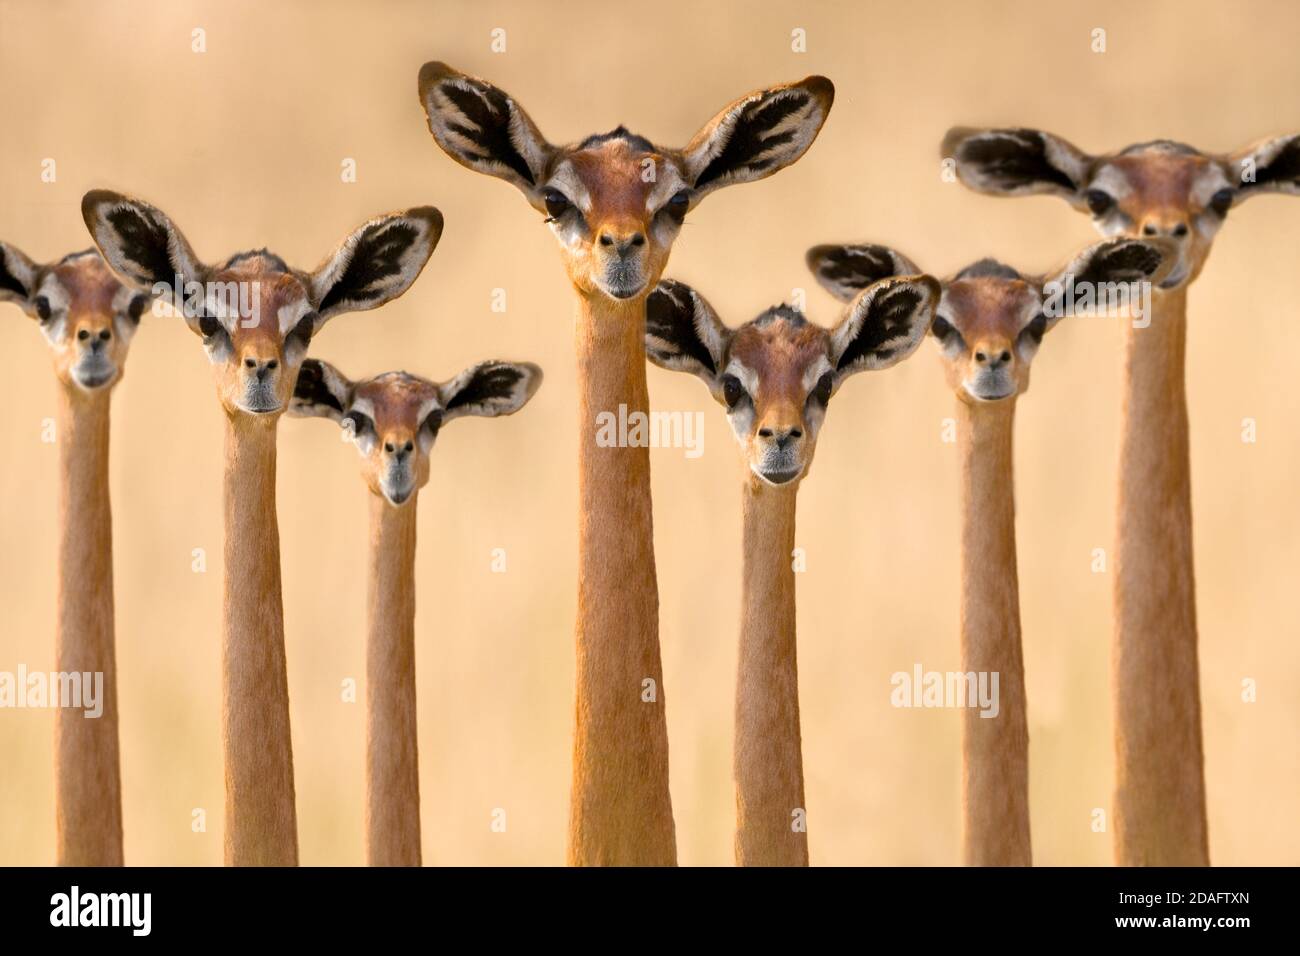 Gerenuk, également connu sous le nom de gazelle girafe, Samburu, Kenya Banque D'Images